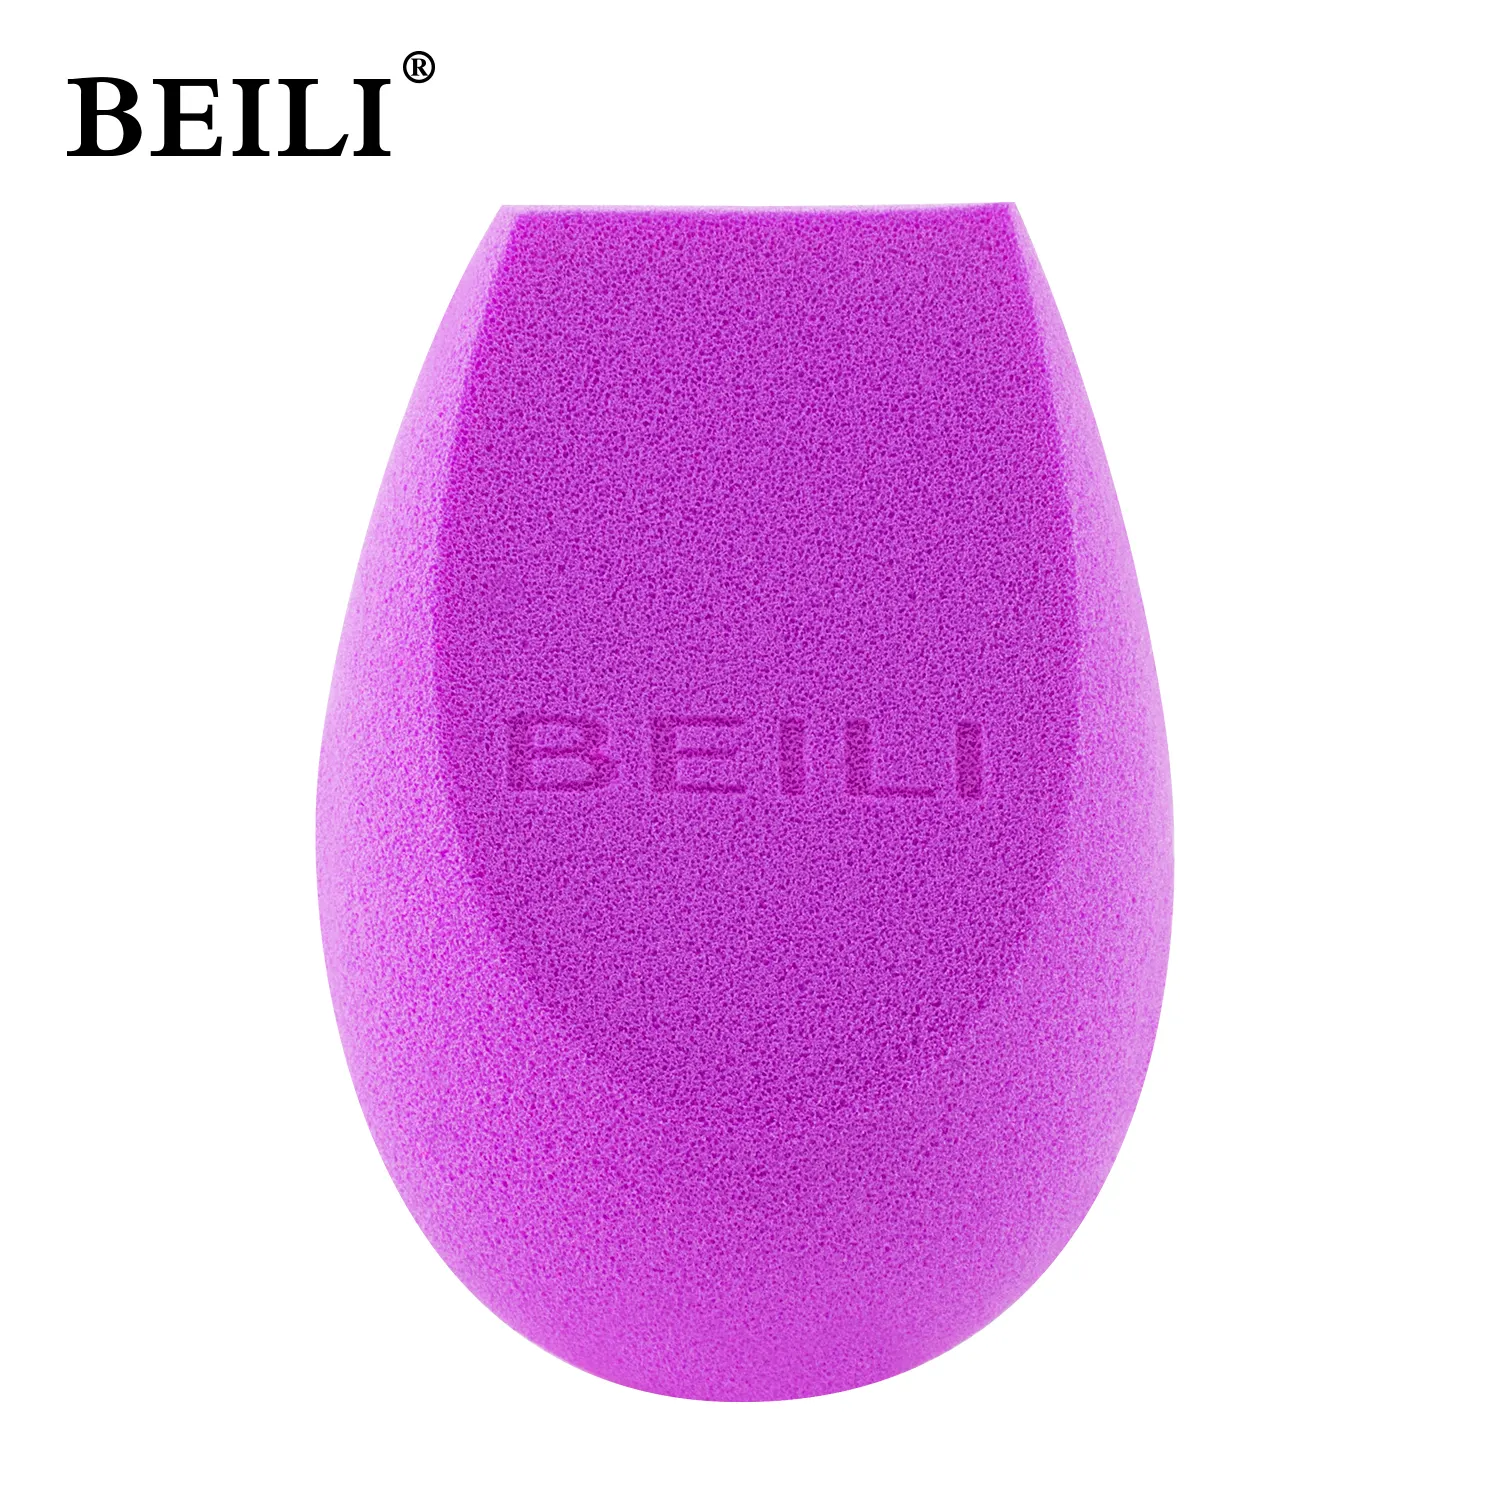 BEILI New shape makeup sponge purple Non-latex foundation powder puff sponge private label blender makeup sponge